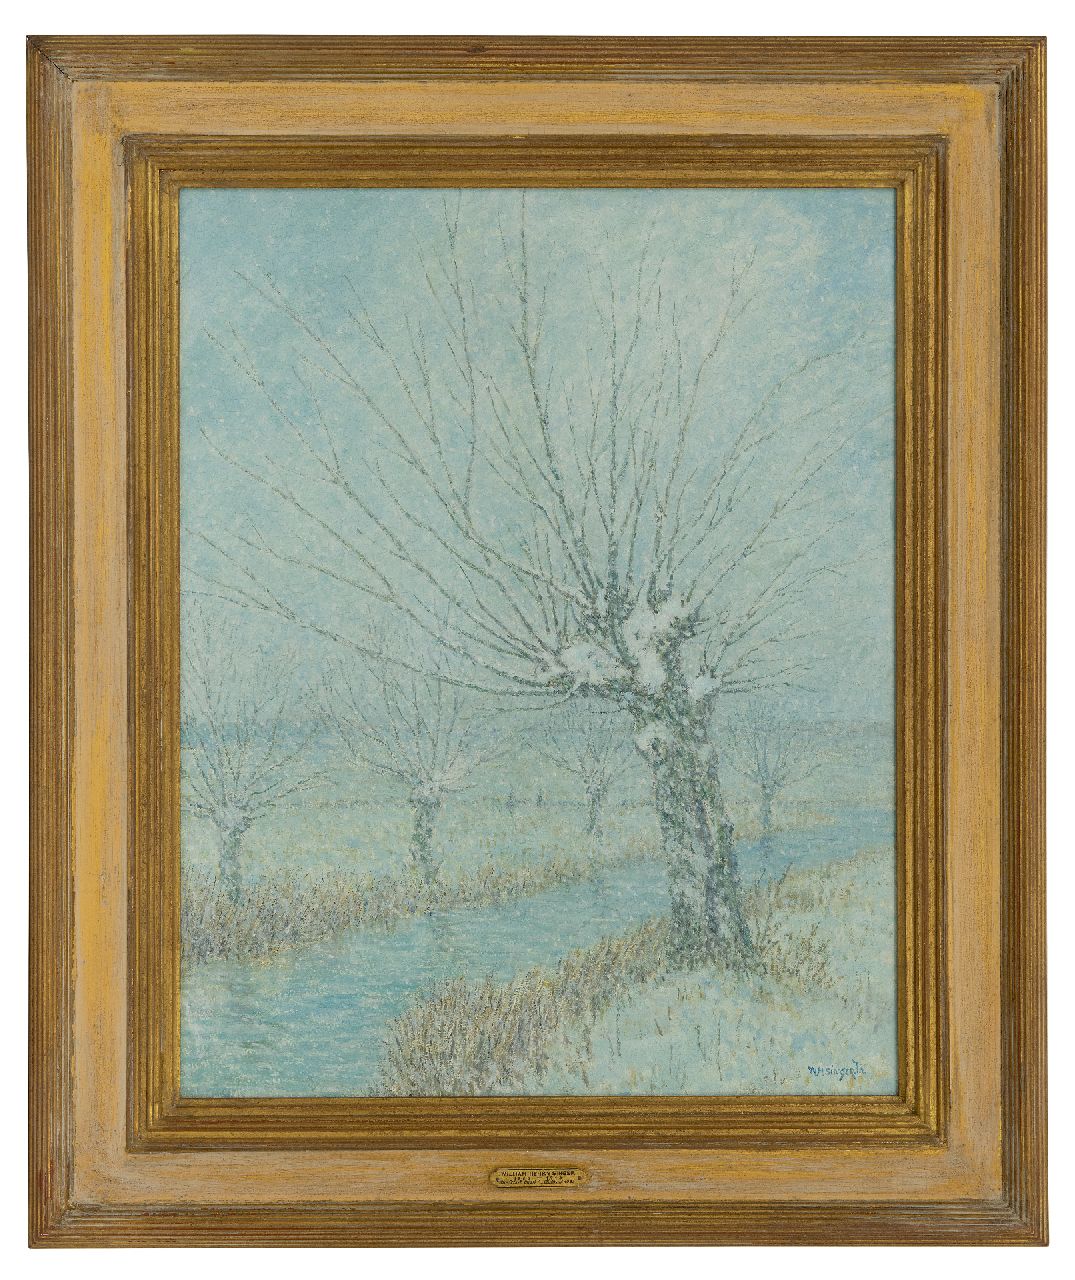 Singer W.H.  | William Henry Singer, The First Snow, Holland, olieverf op board 50,5 x 40,0 cm, gesigneerd rechtsonder en verso gedateerd 1933